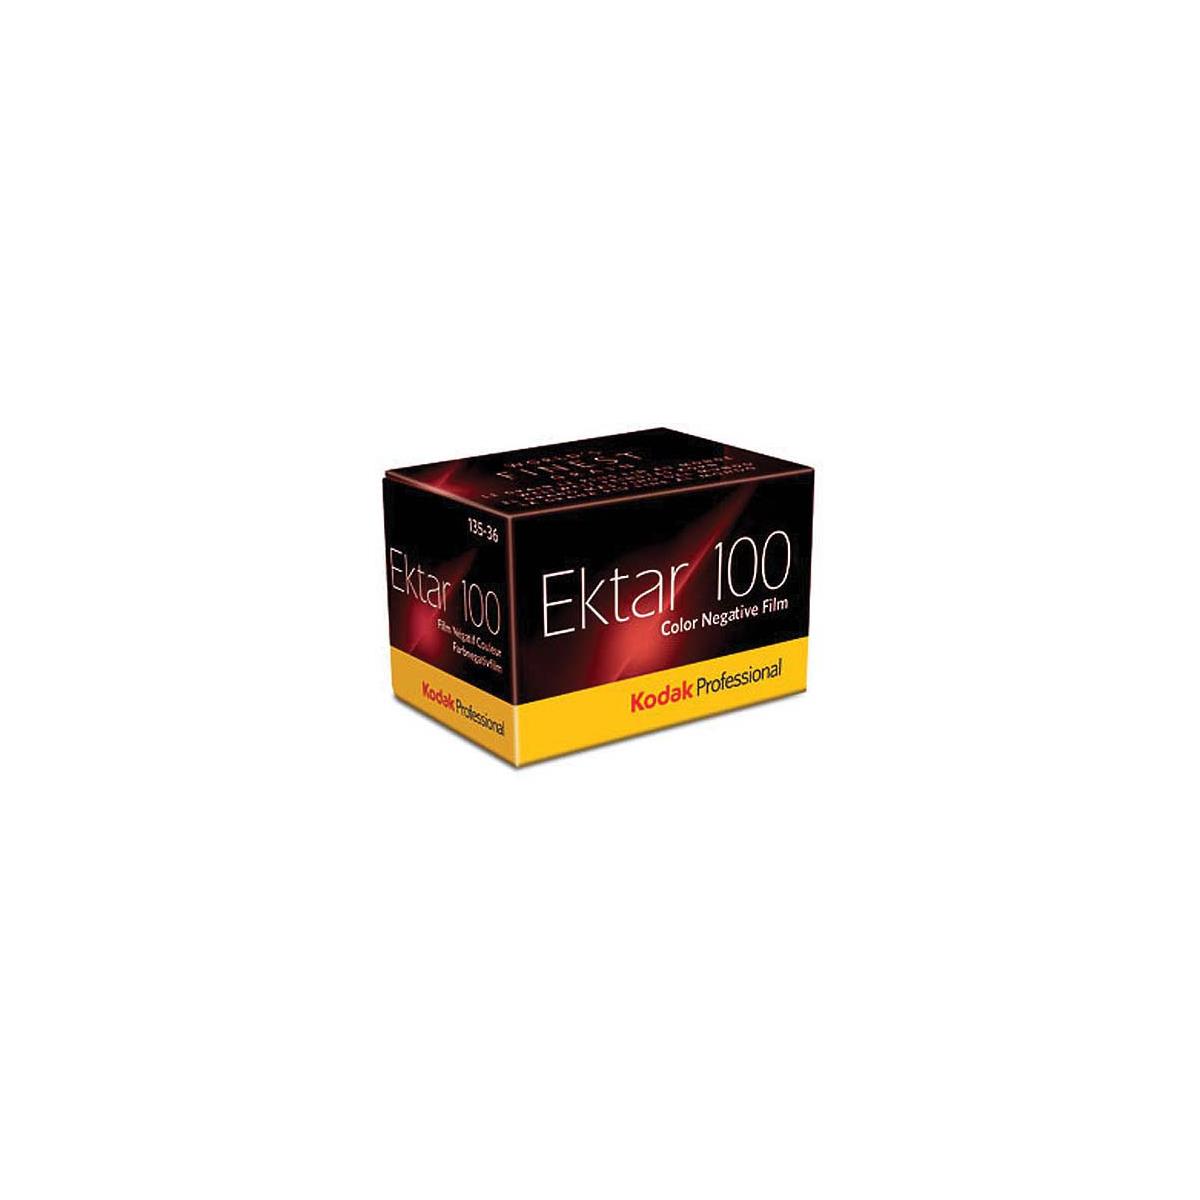 Цветная негативная пленка KODAK Ektar 100, рулонная пленка 35 мм, 36 кадров #6031330